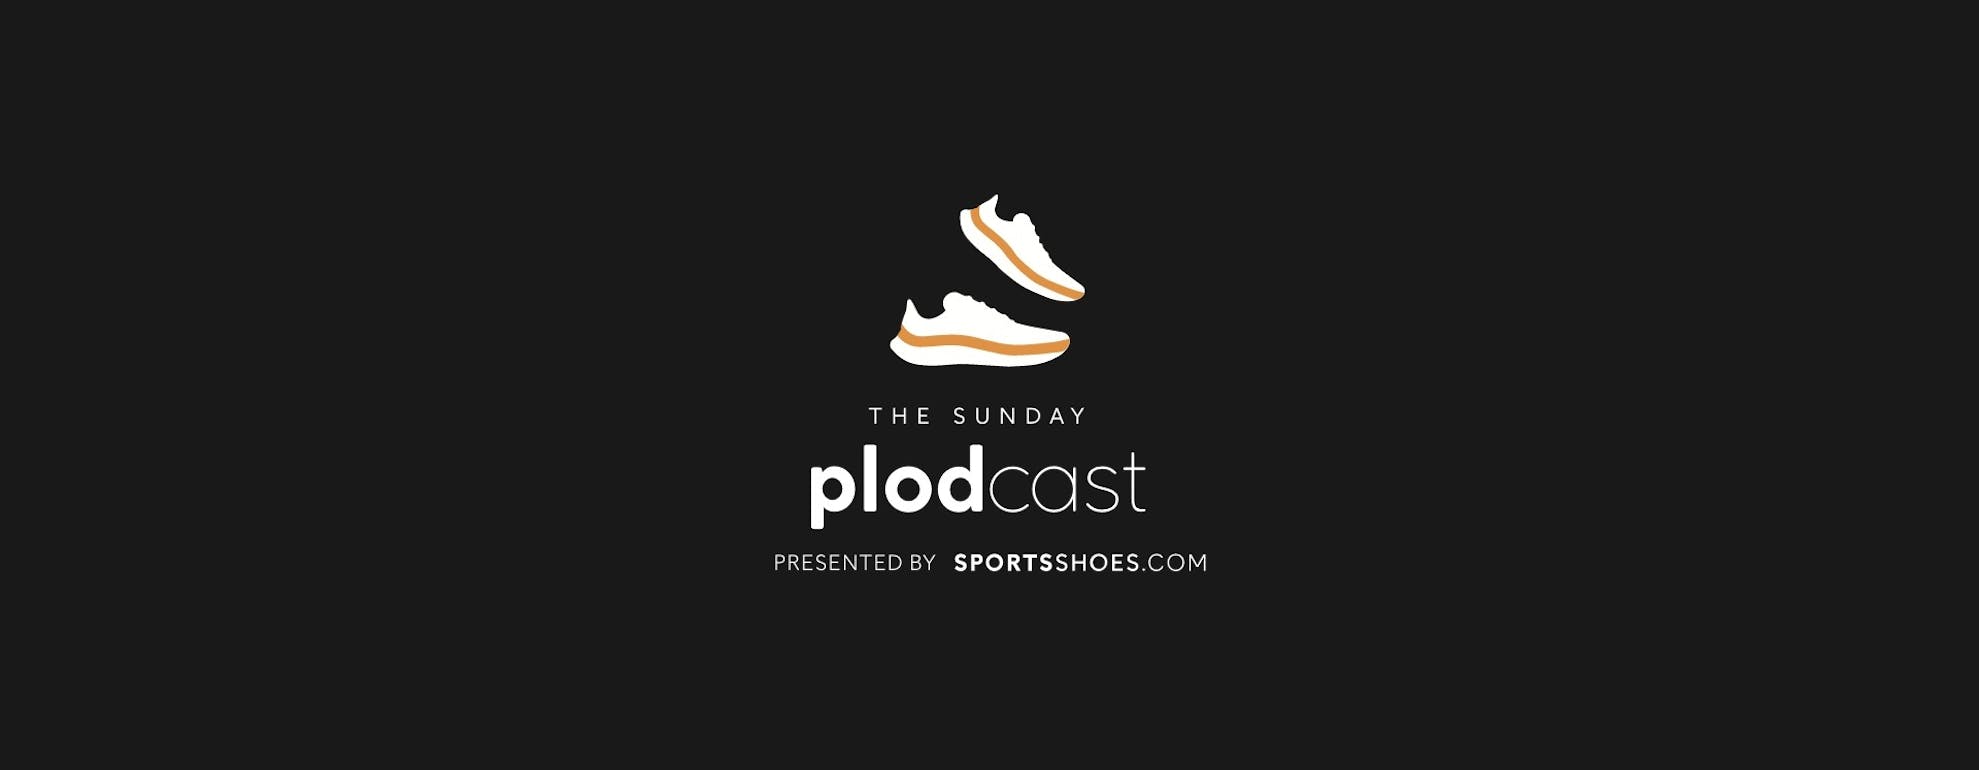 the-sunday-plodcast-sportsshoes